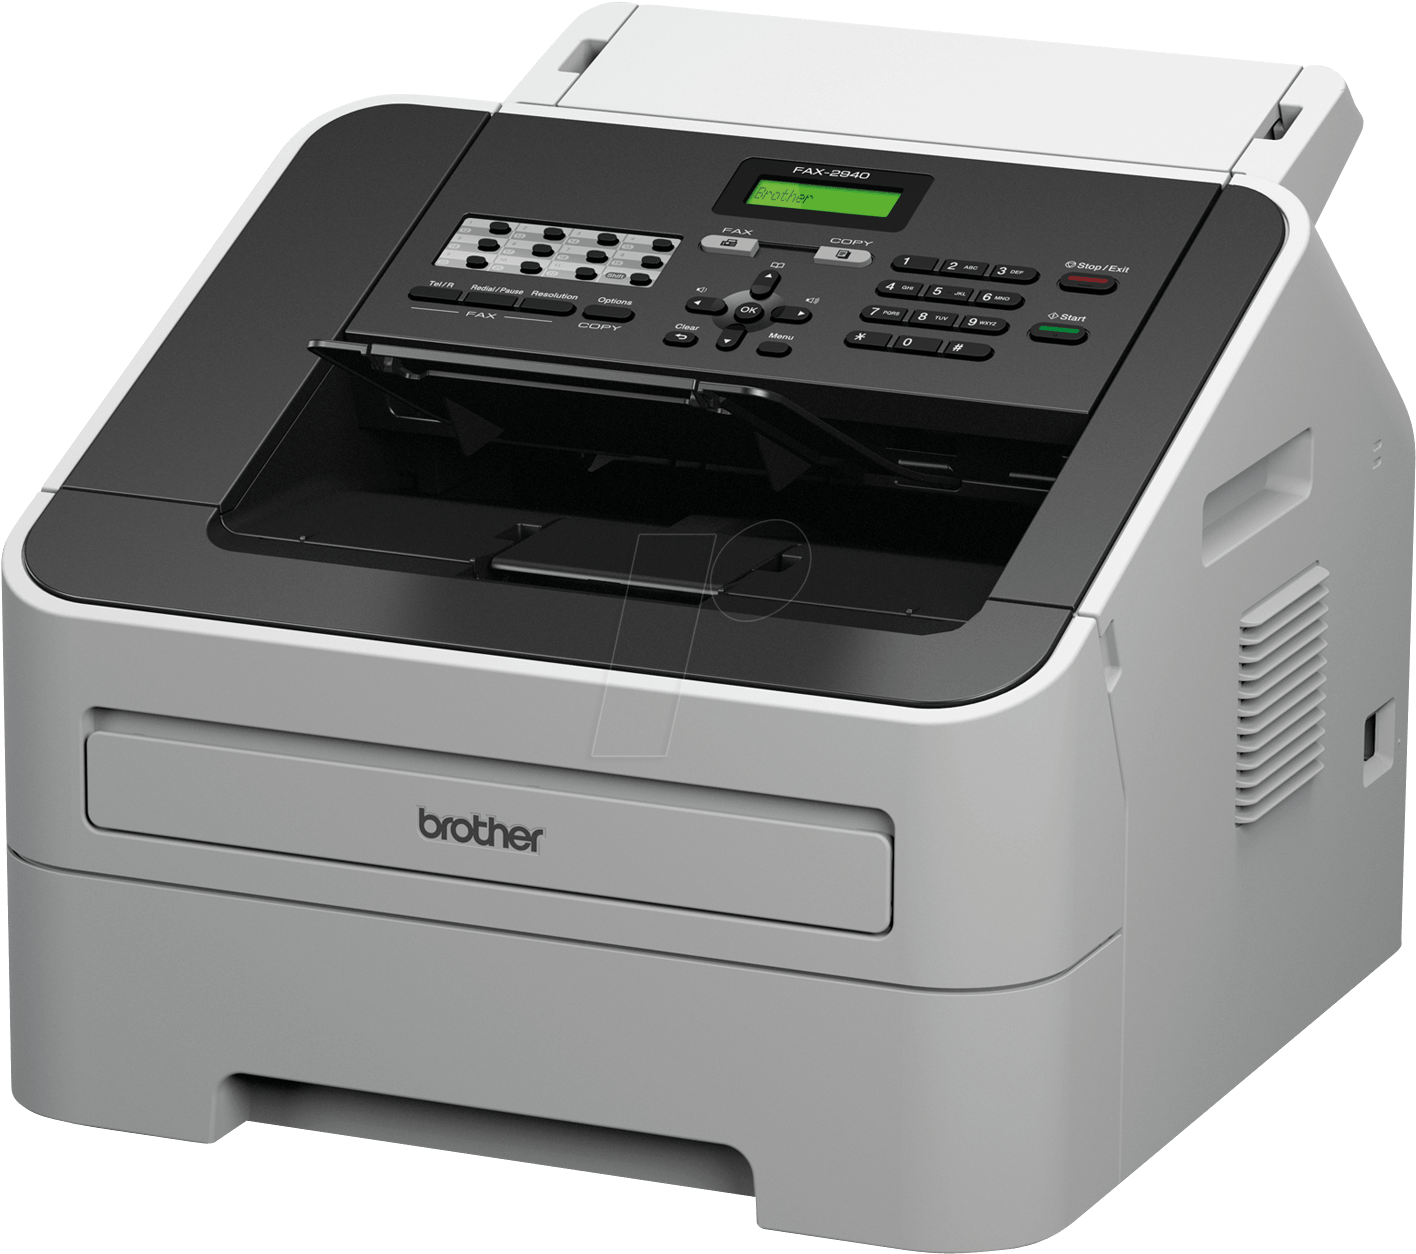 Brother Fax Machine Brother Fax2940g1 - Fax Machine Clipart (1558x1365), Png Download